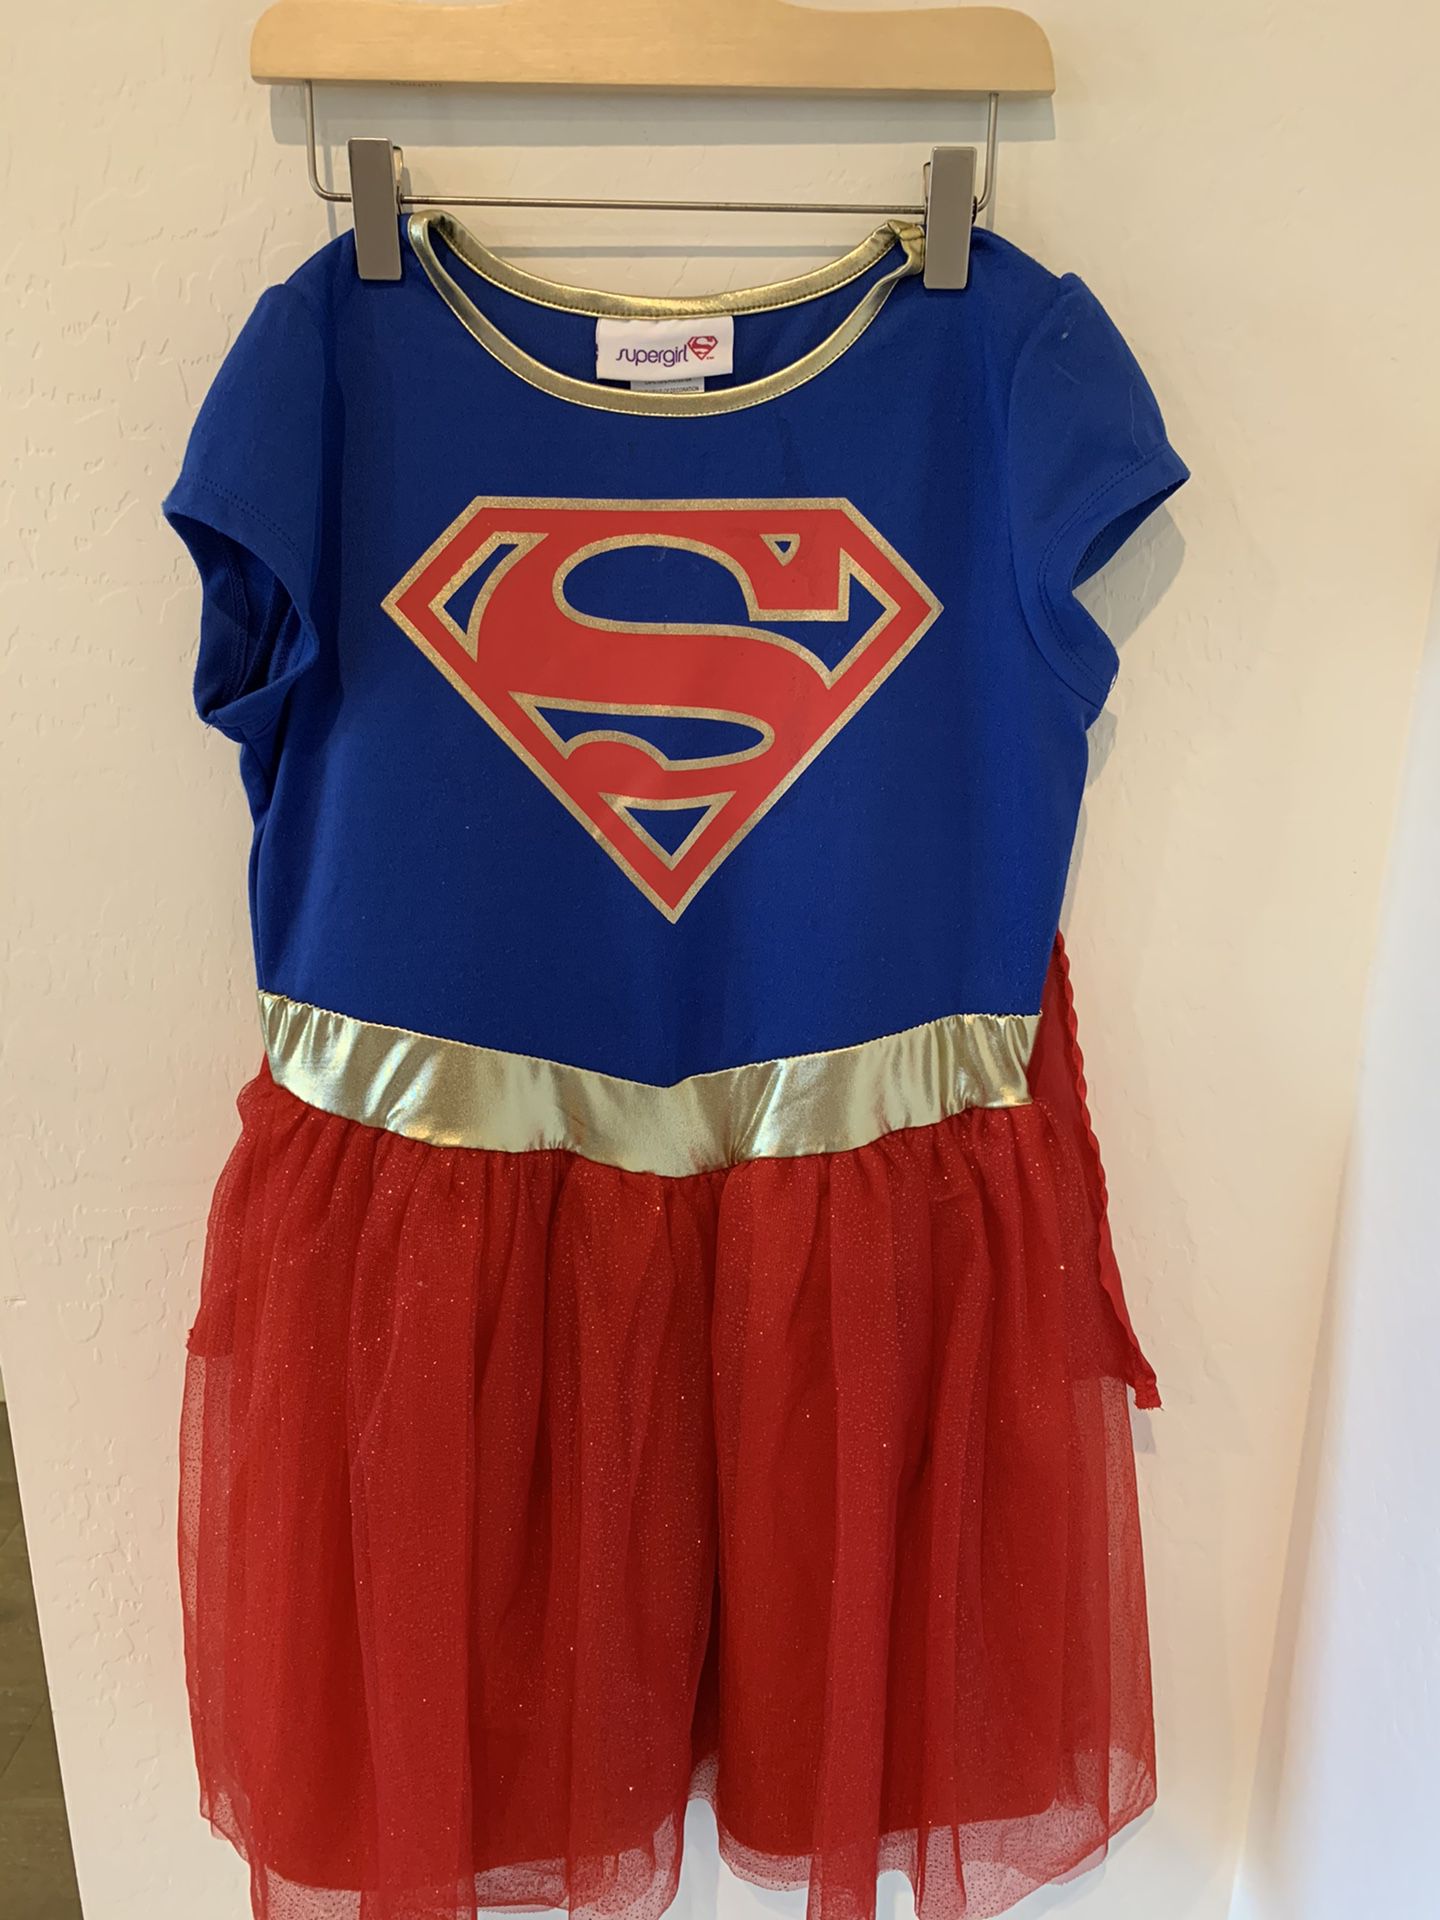 Super girl costume size 10/12